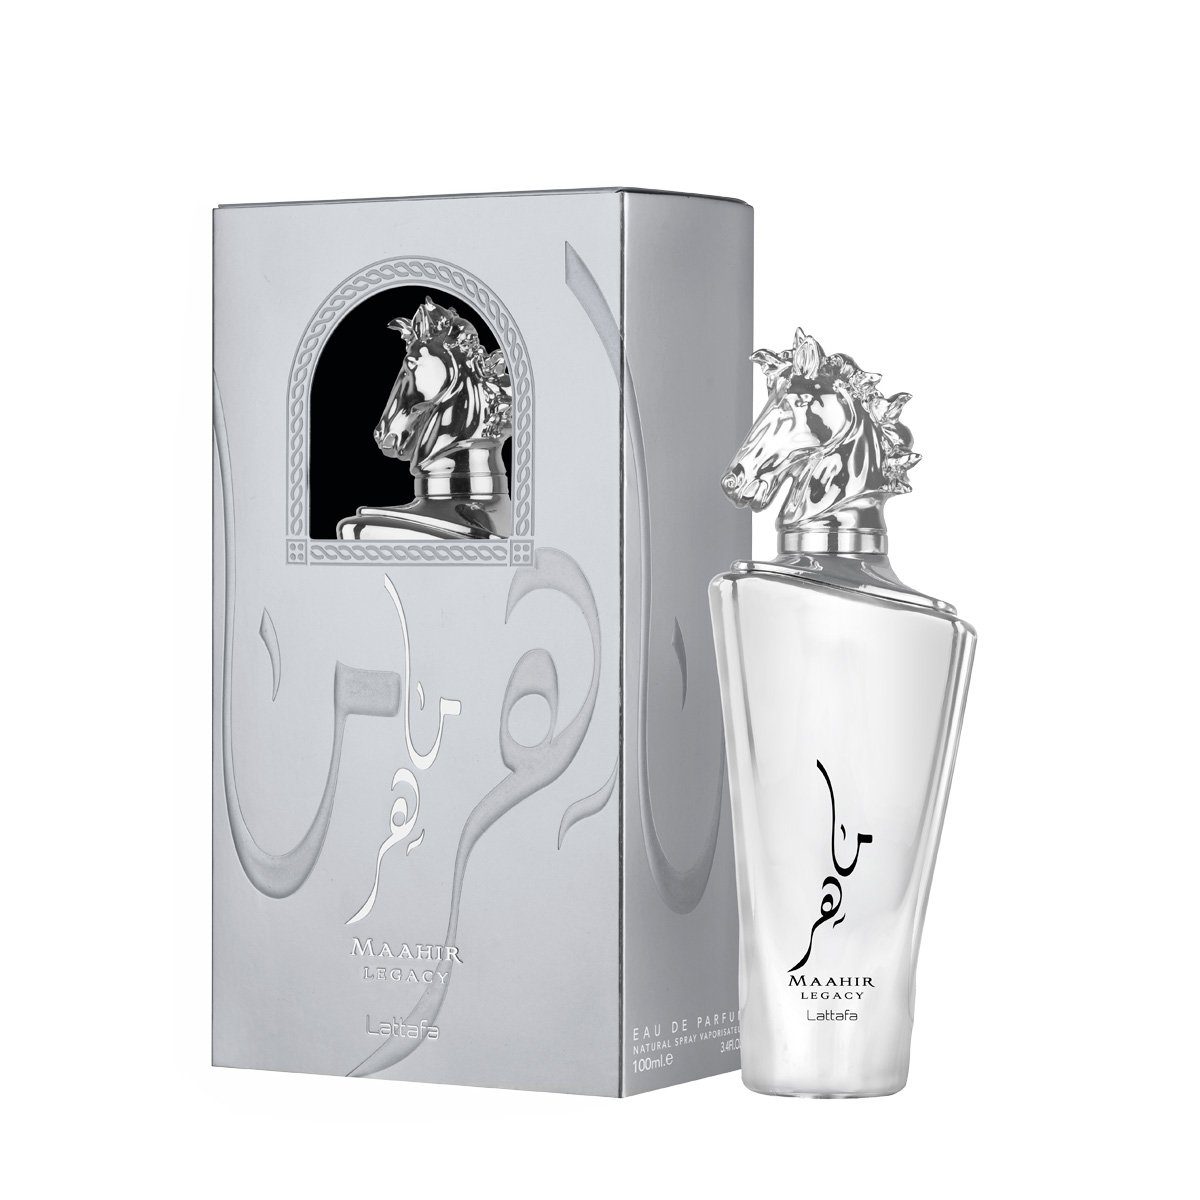 Lattafa Eau Maahir de Legacy Parfum